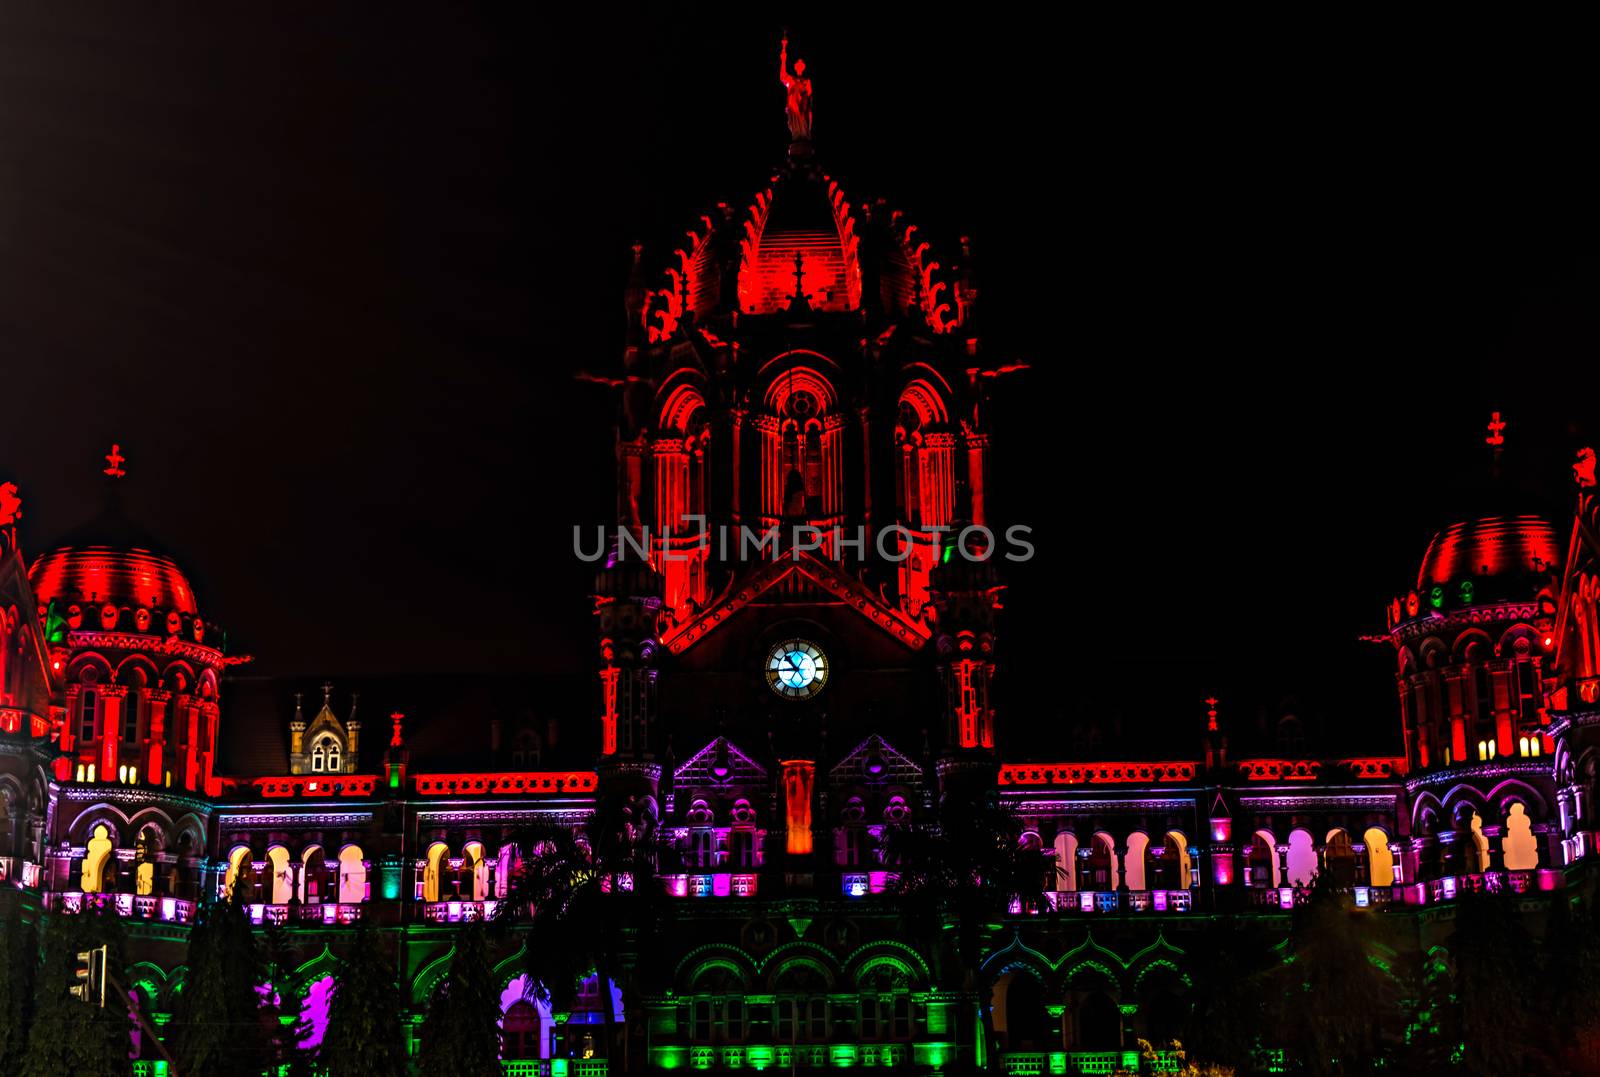 UNESCO world heritage building of `Chatrapati Shivaji Maharaj Terminus` railway station illuminated resembling like Indian flag by lalam